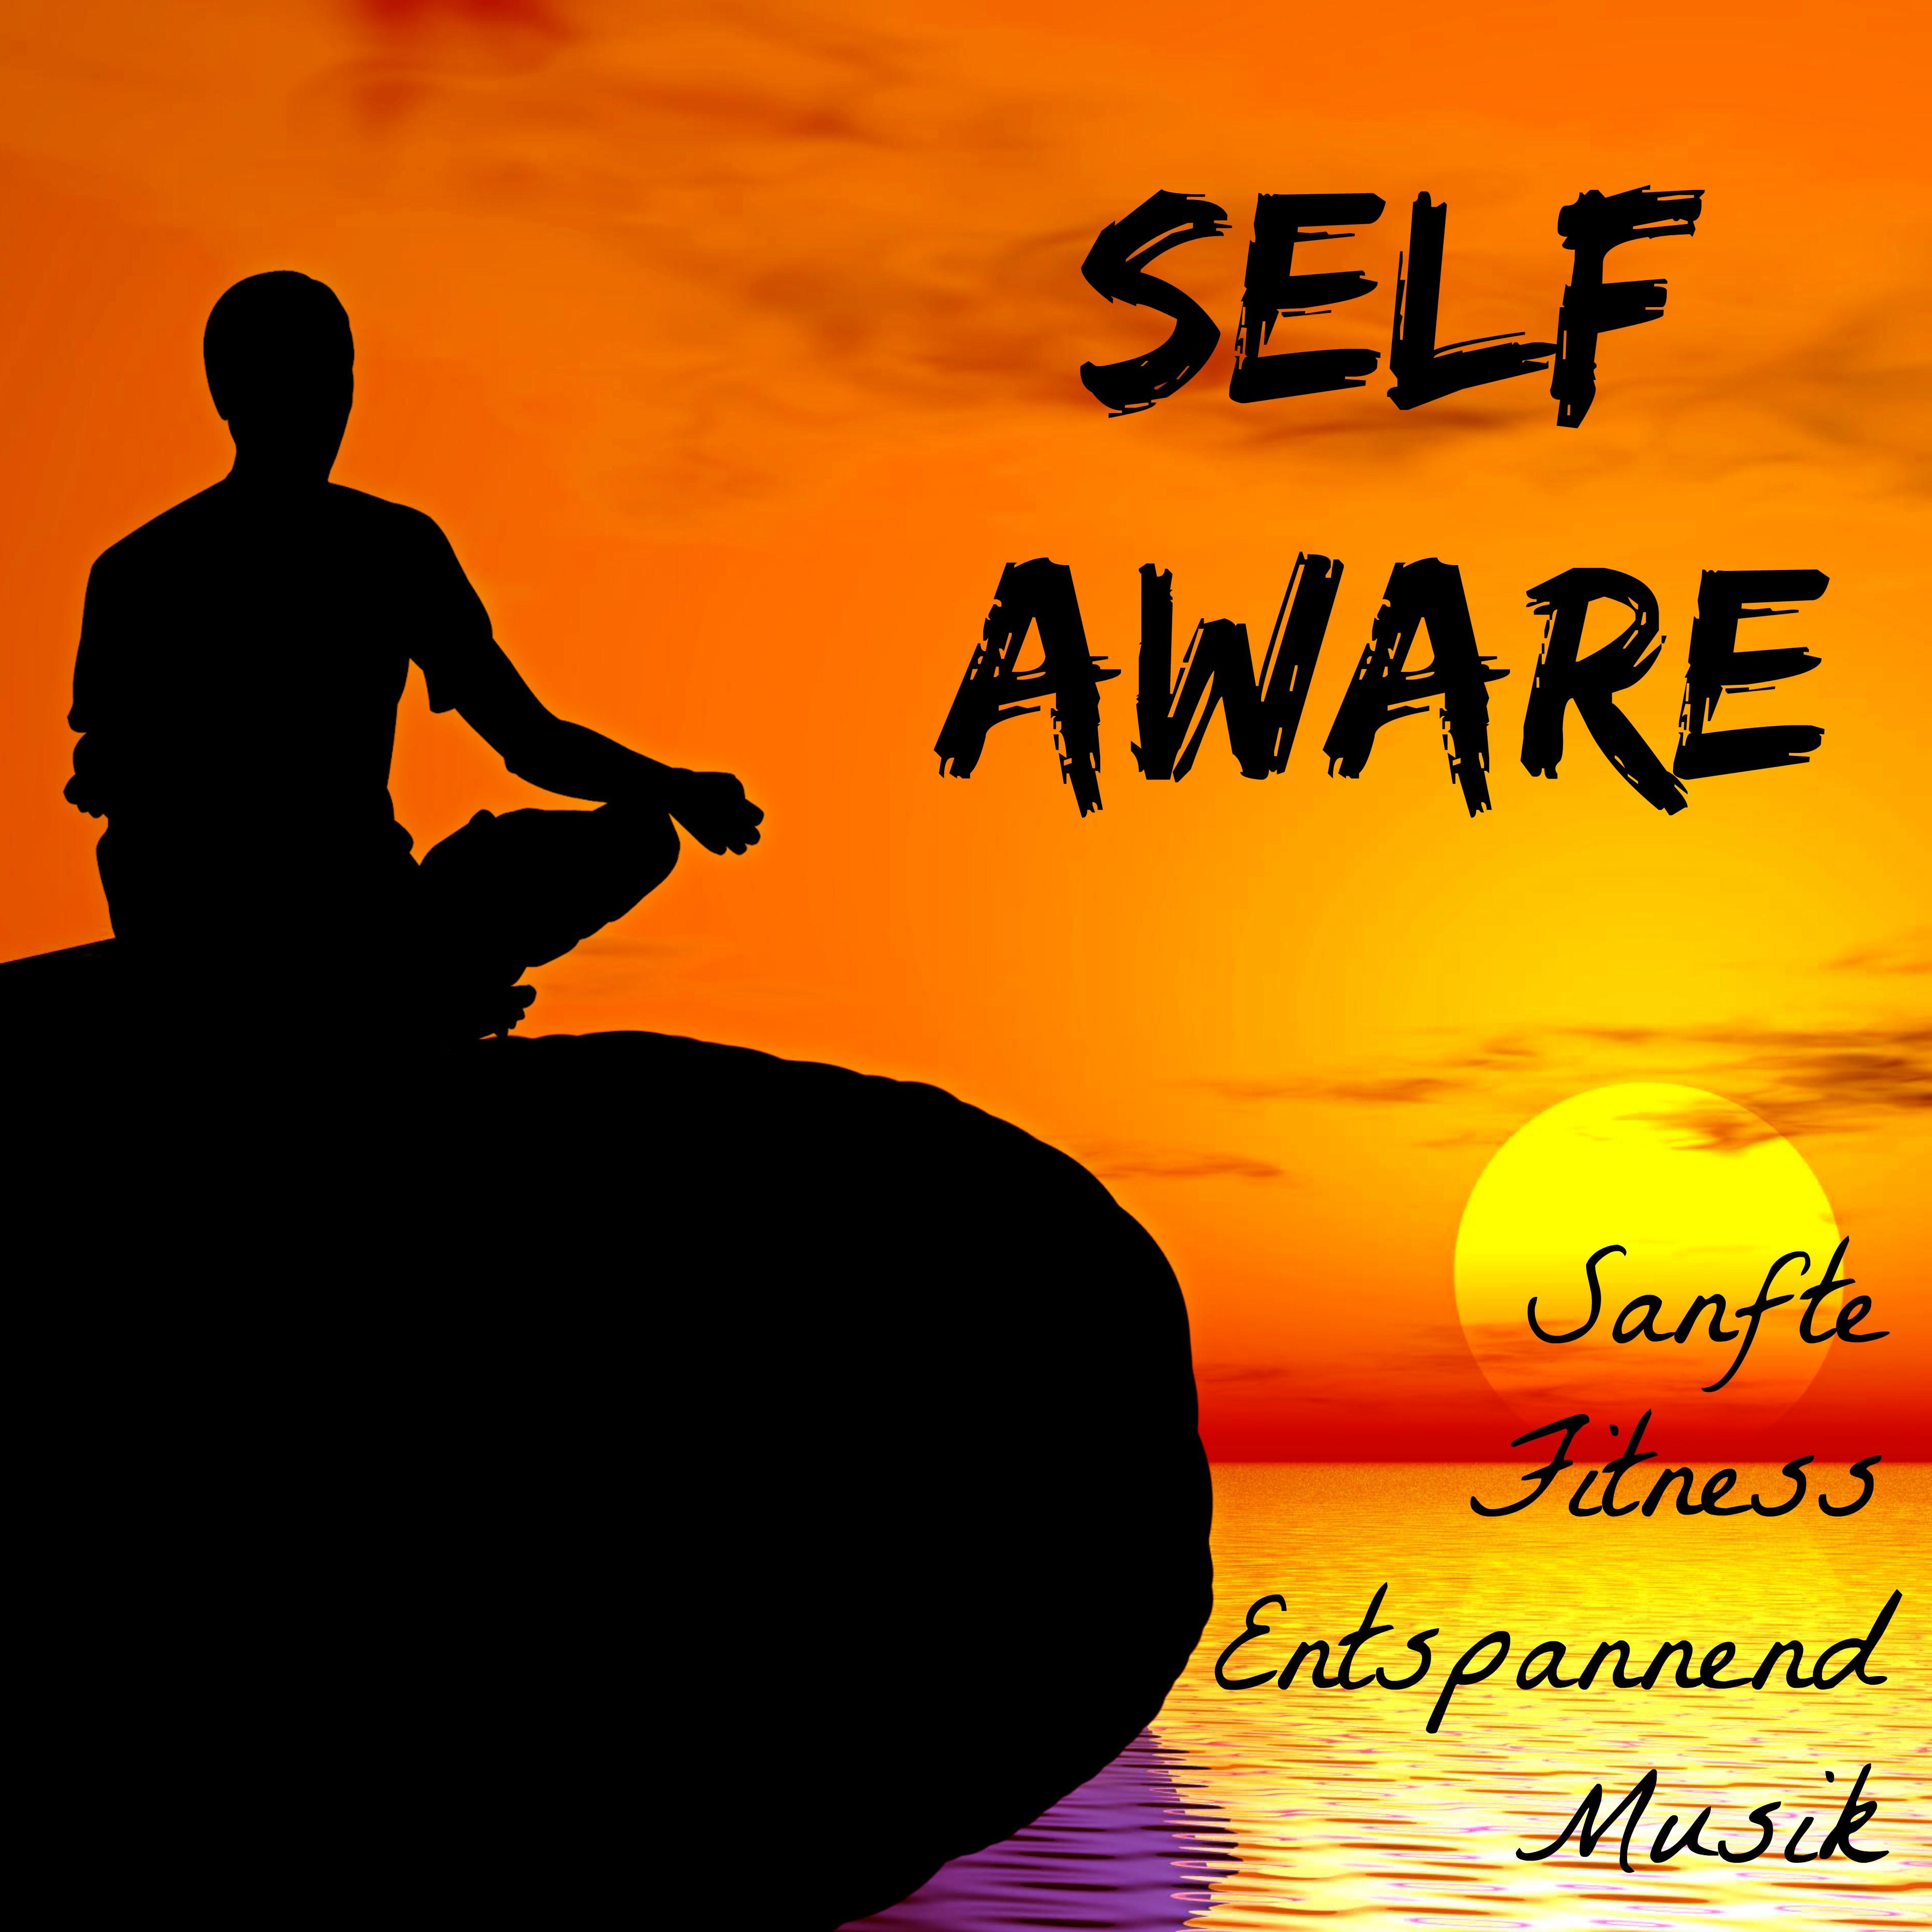 Self Awareness (Concentration & Mindfulness)